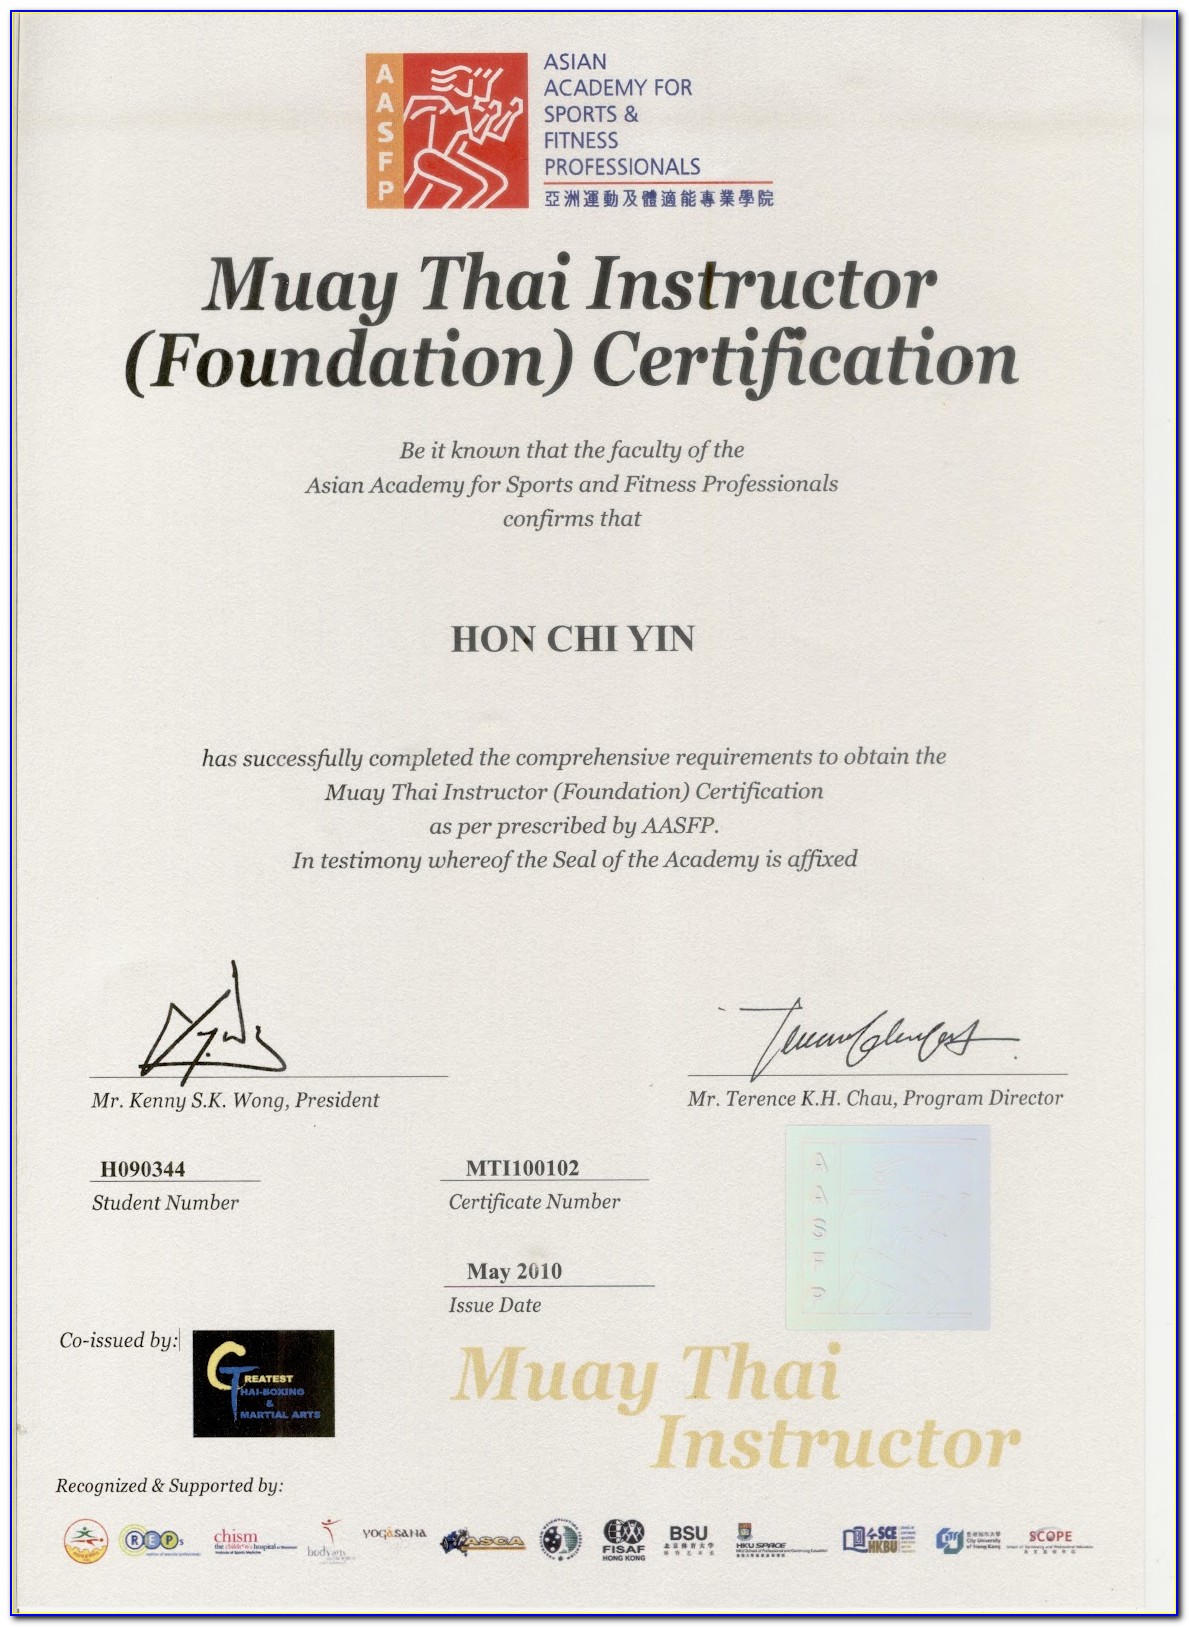 Muay Thai Instructor Certification Singapore